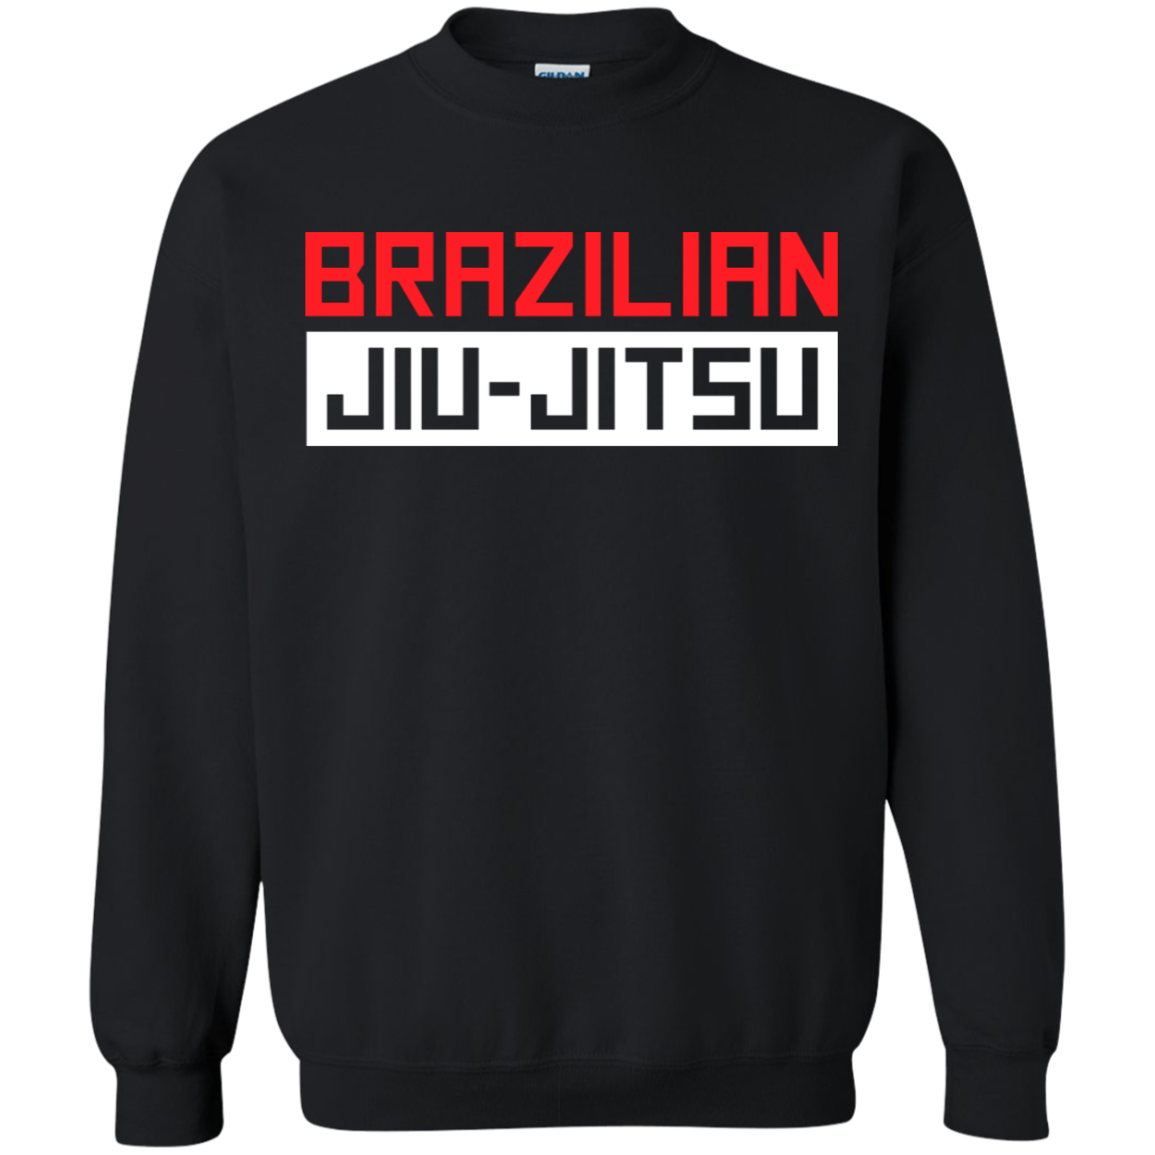 Brazilian Jiu Jitsu Logo BJJ Crewneck Pullover Sweatshirt  8 oz.